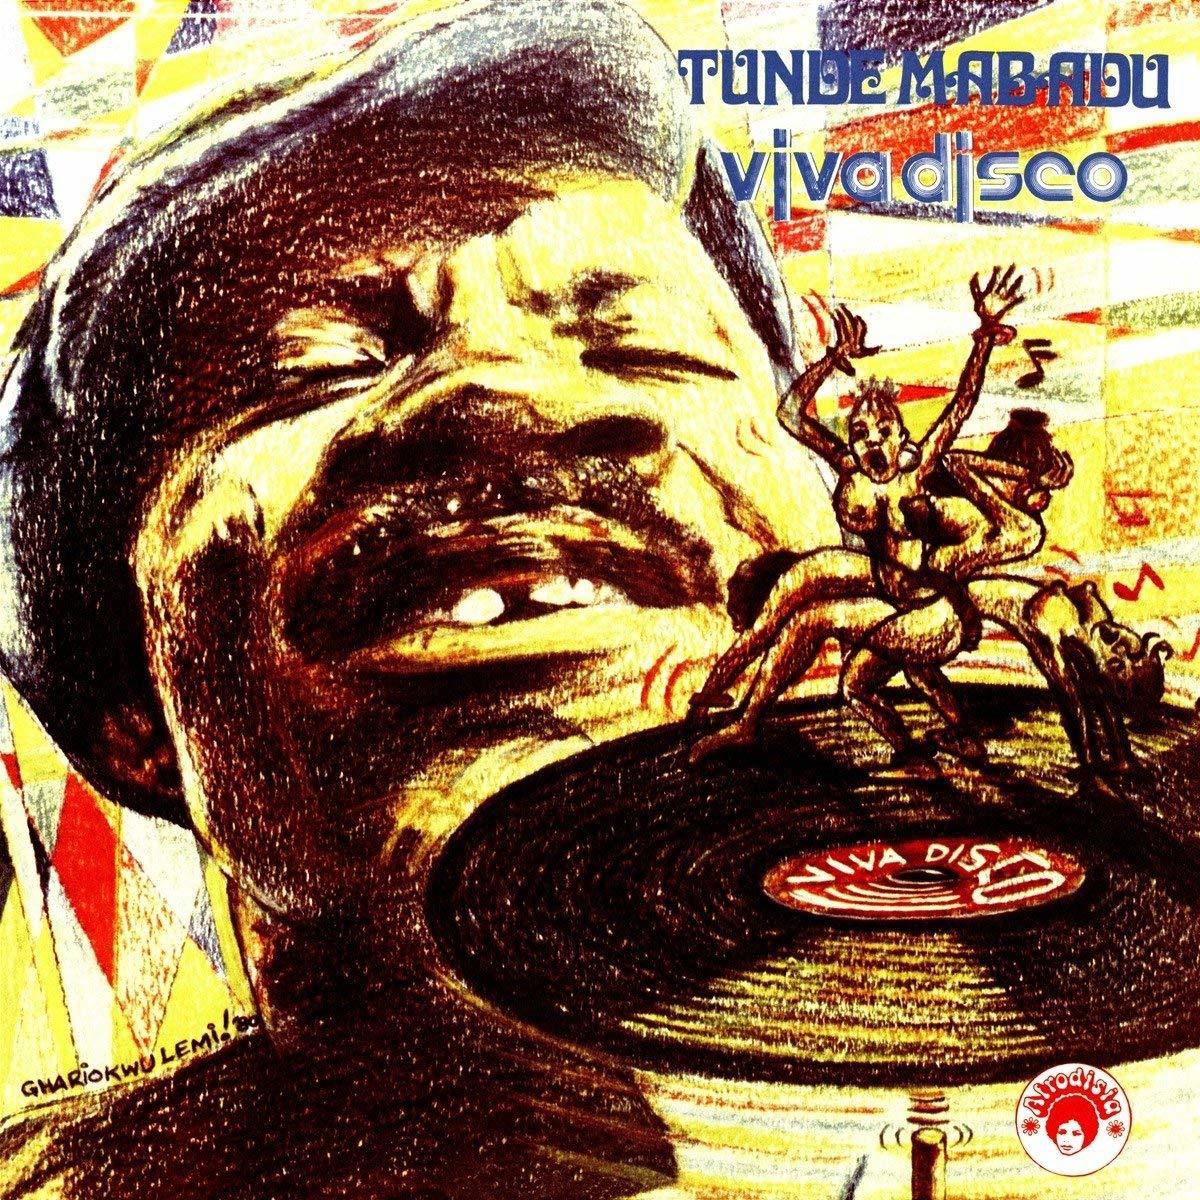 Tunde Viva - - Disco Mabadu (Vinyl)